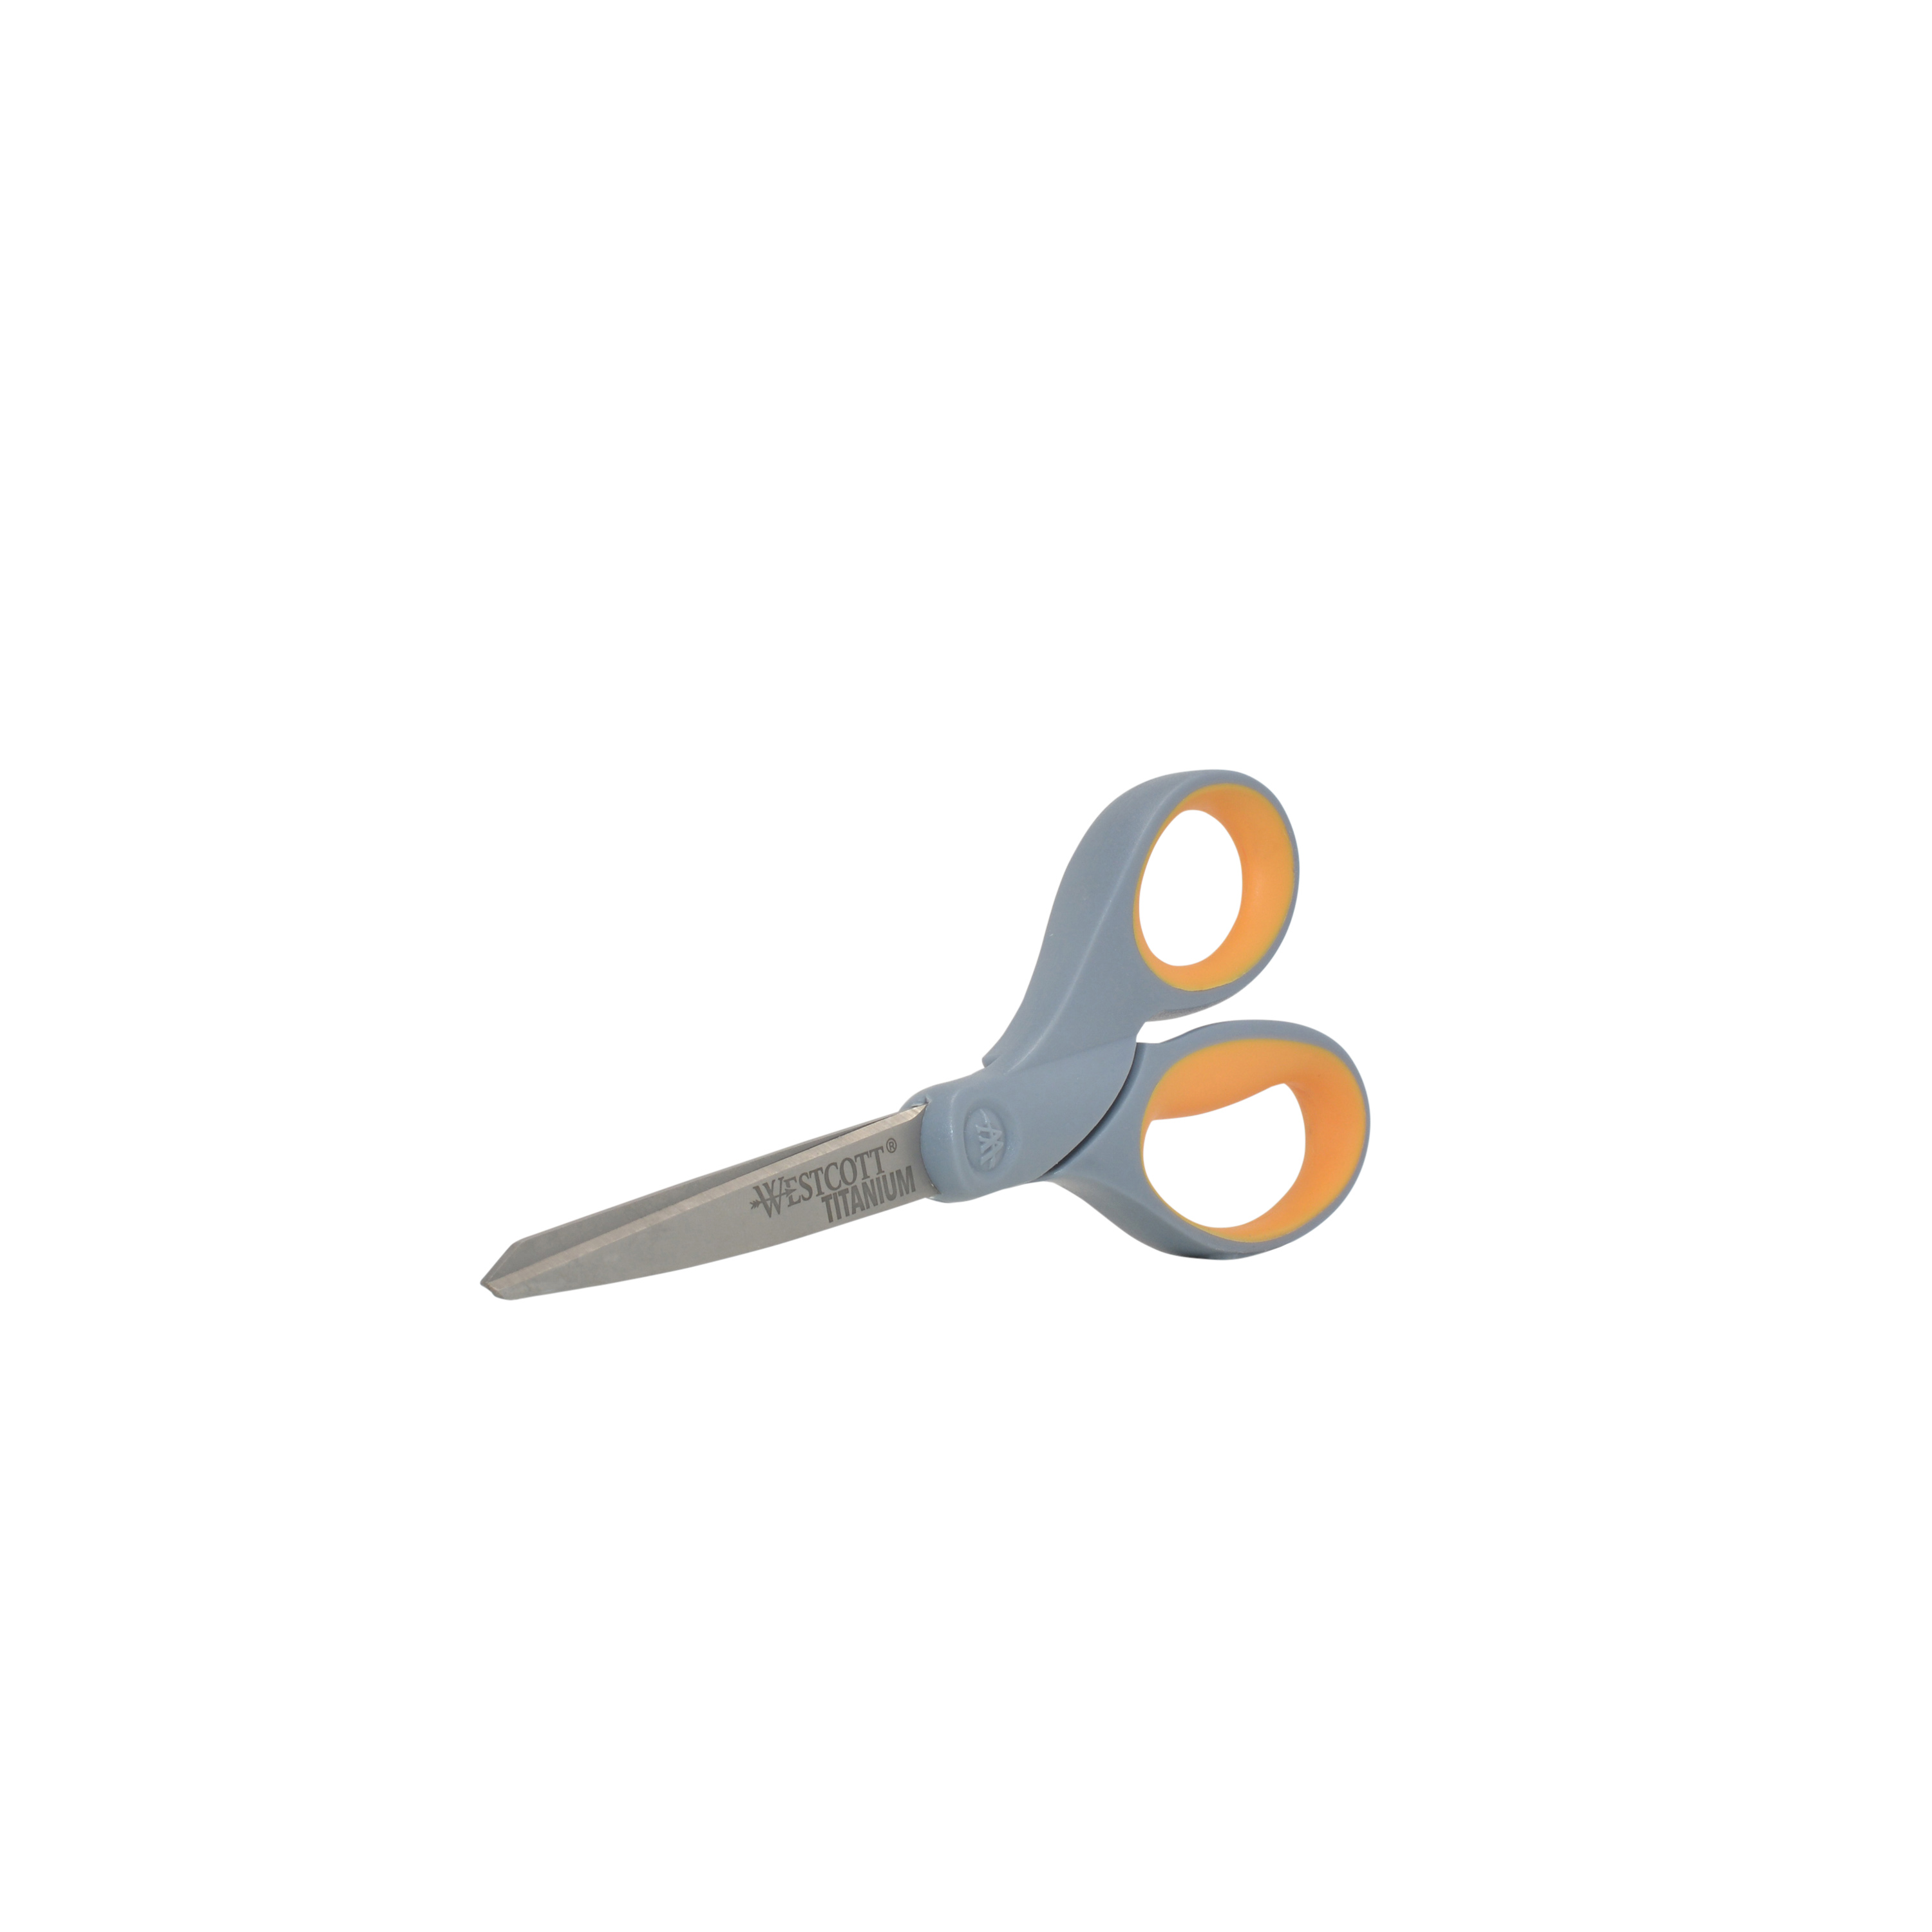 Westcott® Titanium Bonded Non-Stick Scissors, 8L Straight, Gray/Yellow -  Pkg Qty 6